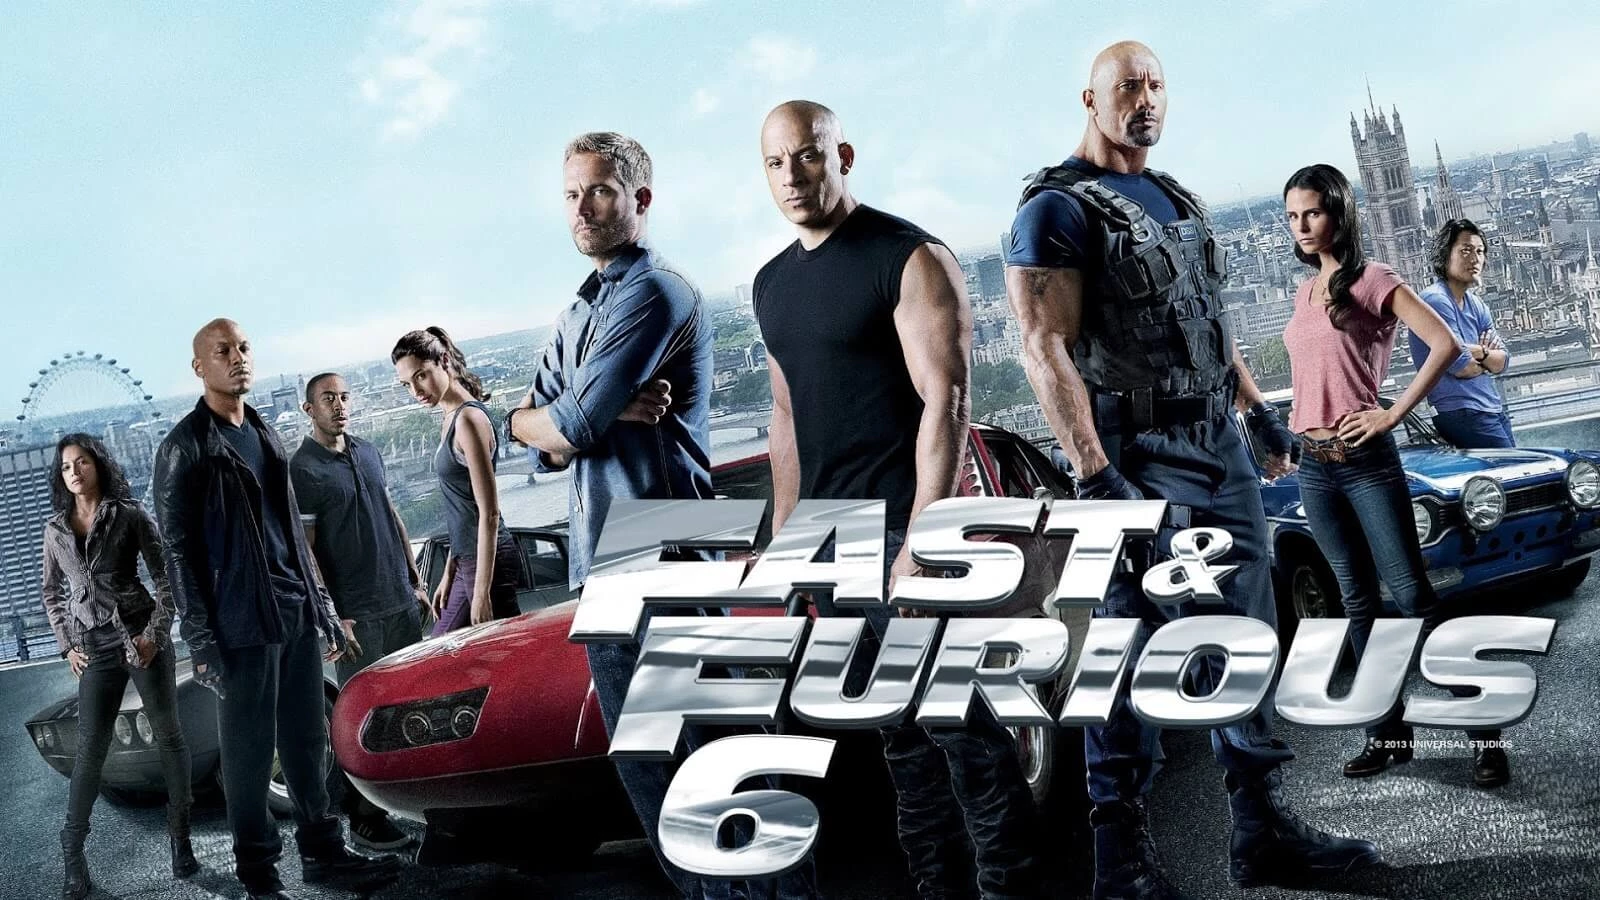 Fast & furious 6 (2013)